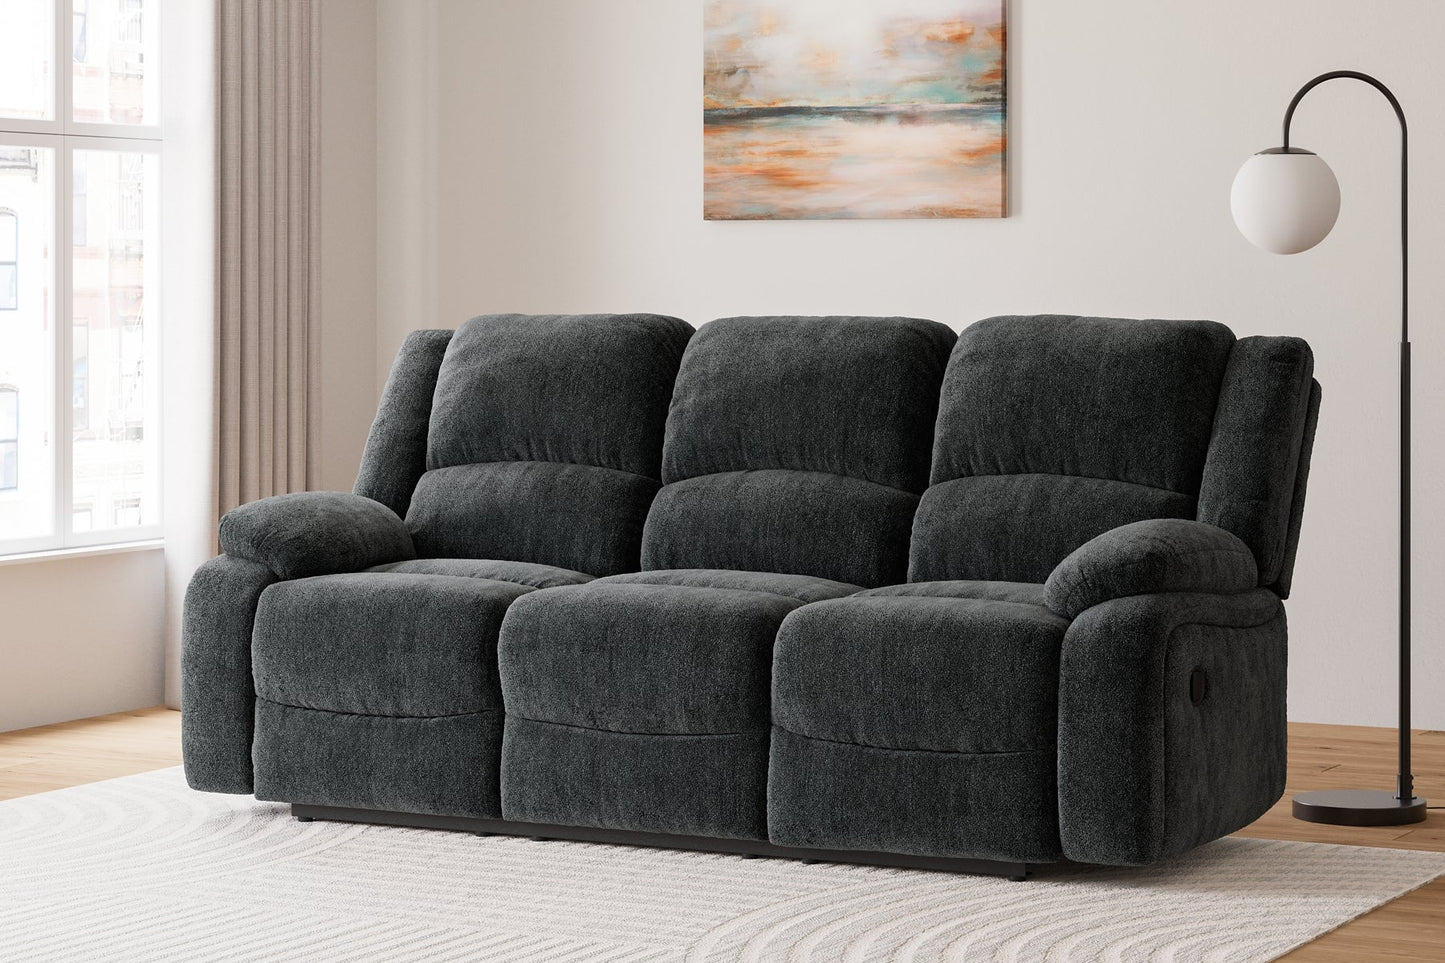 Draycoll Reclining Sofa at Towne & Country Furniture (AL) furniture, home furniture, home decor, sofa, bedding